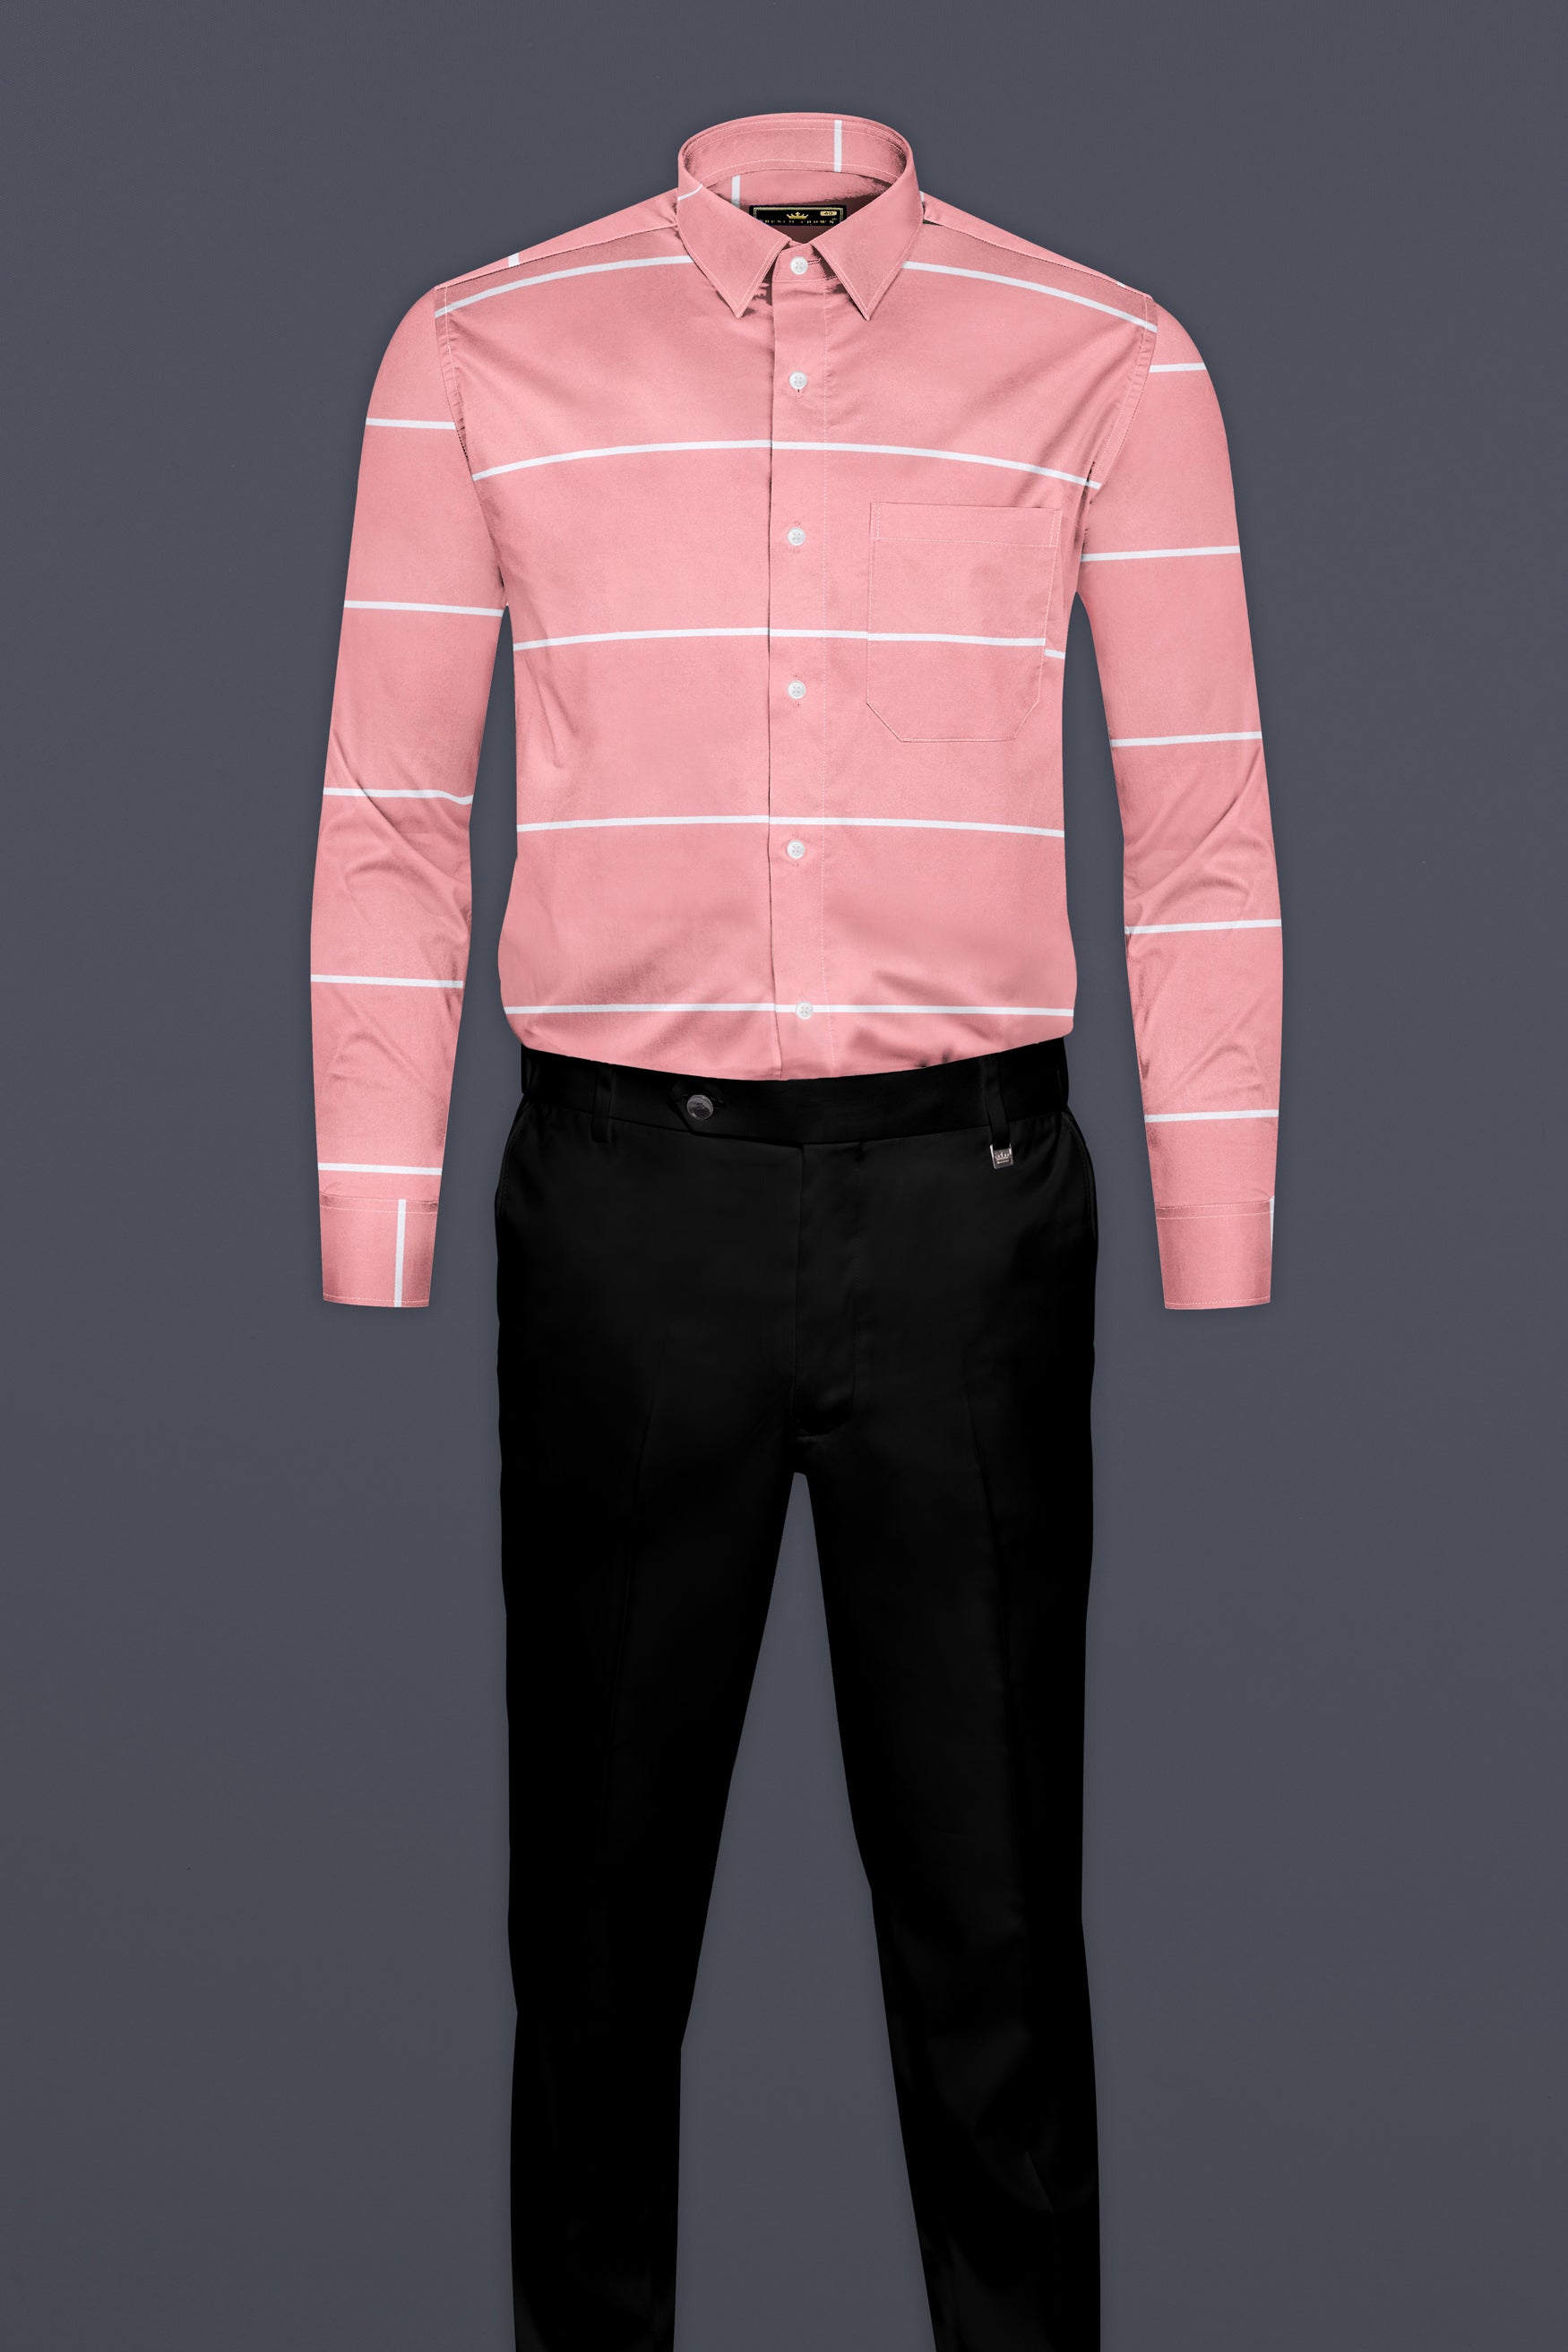 Wewak Pink with White Horizontal Striped Twill Premium Cotton Shirt